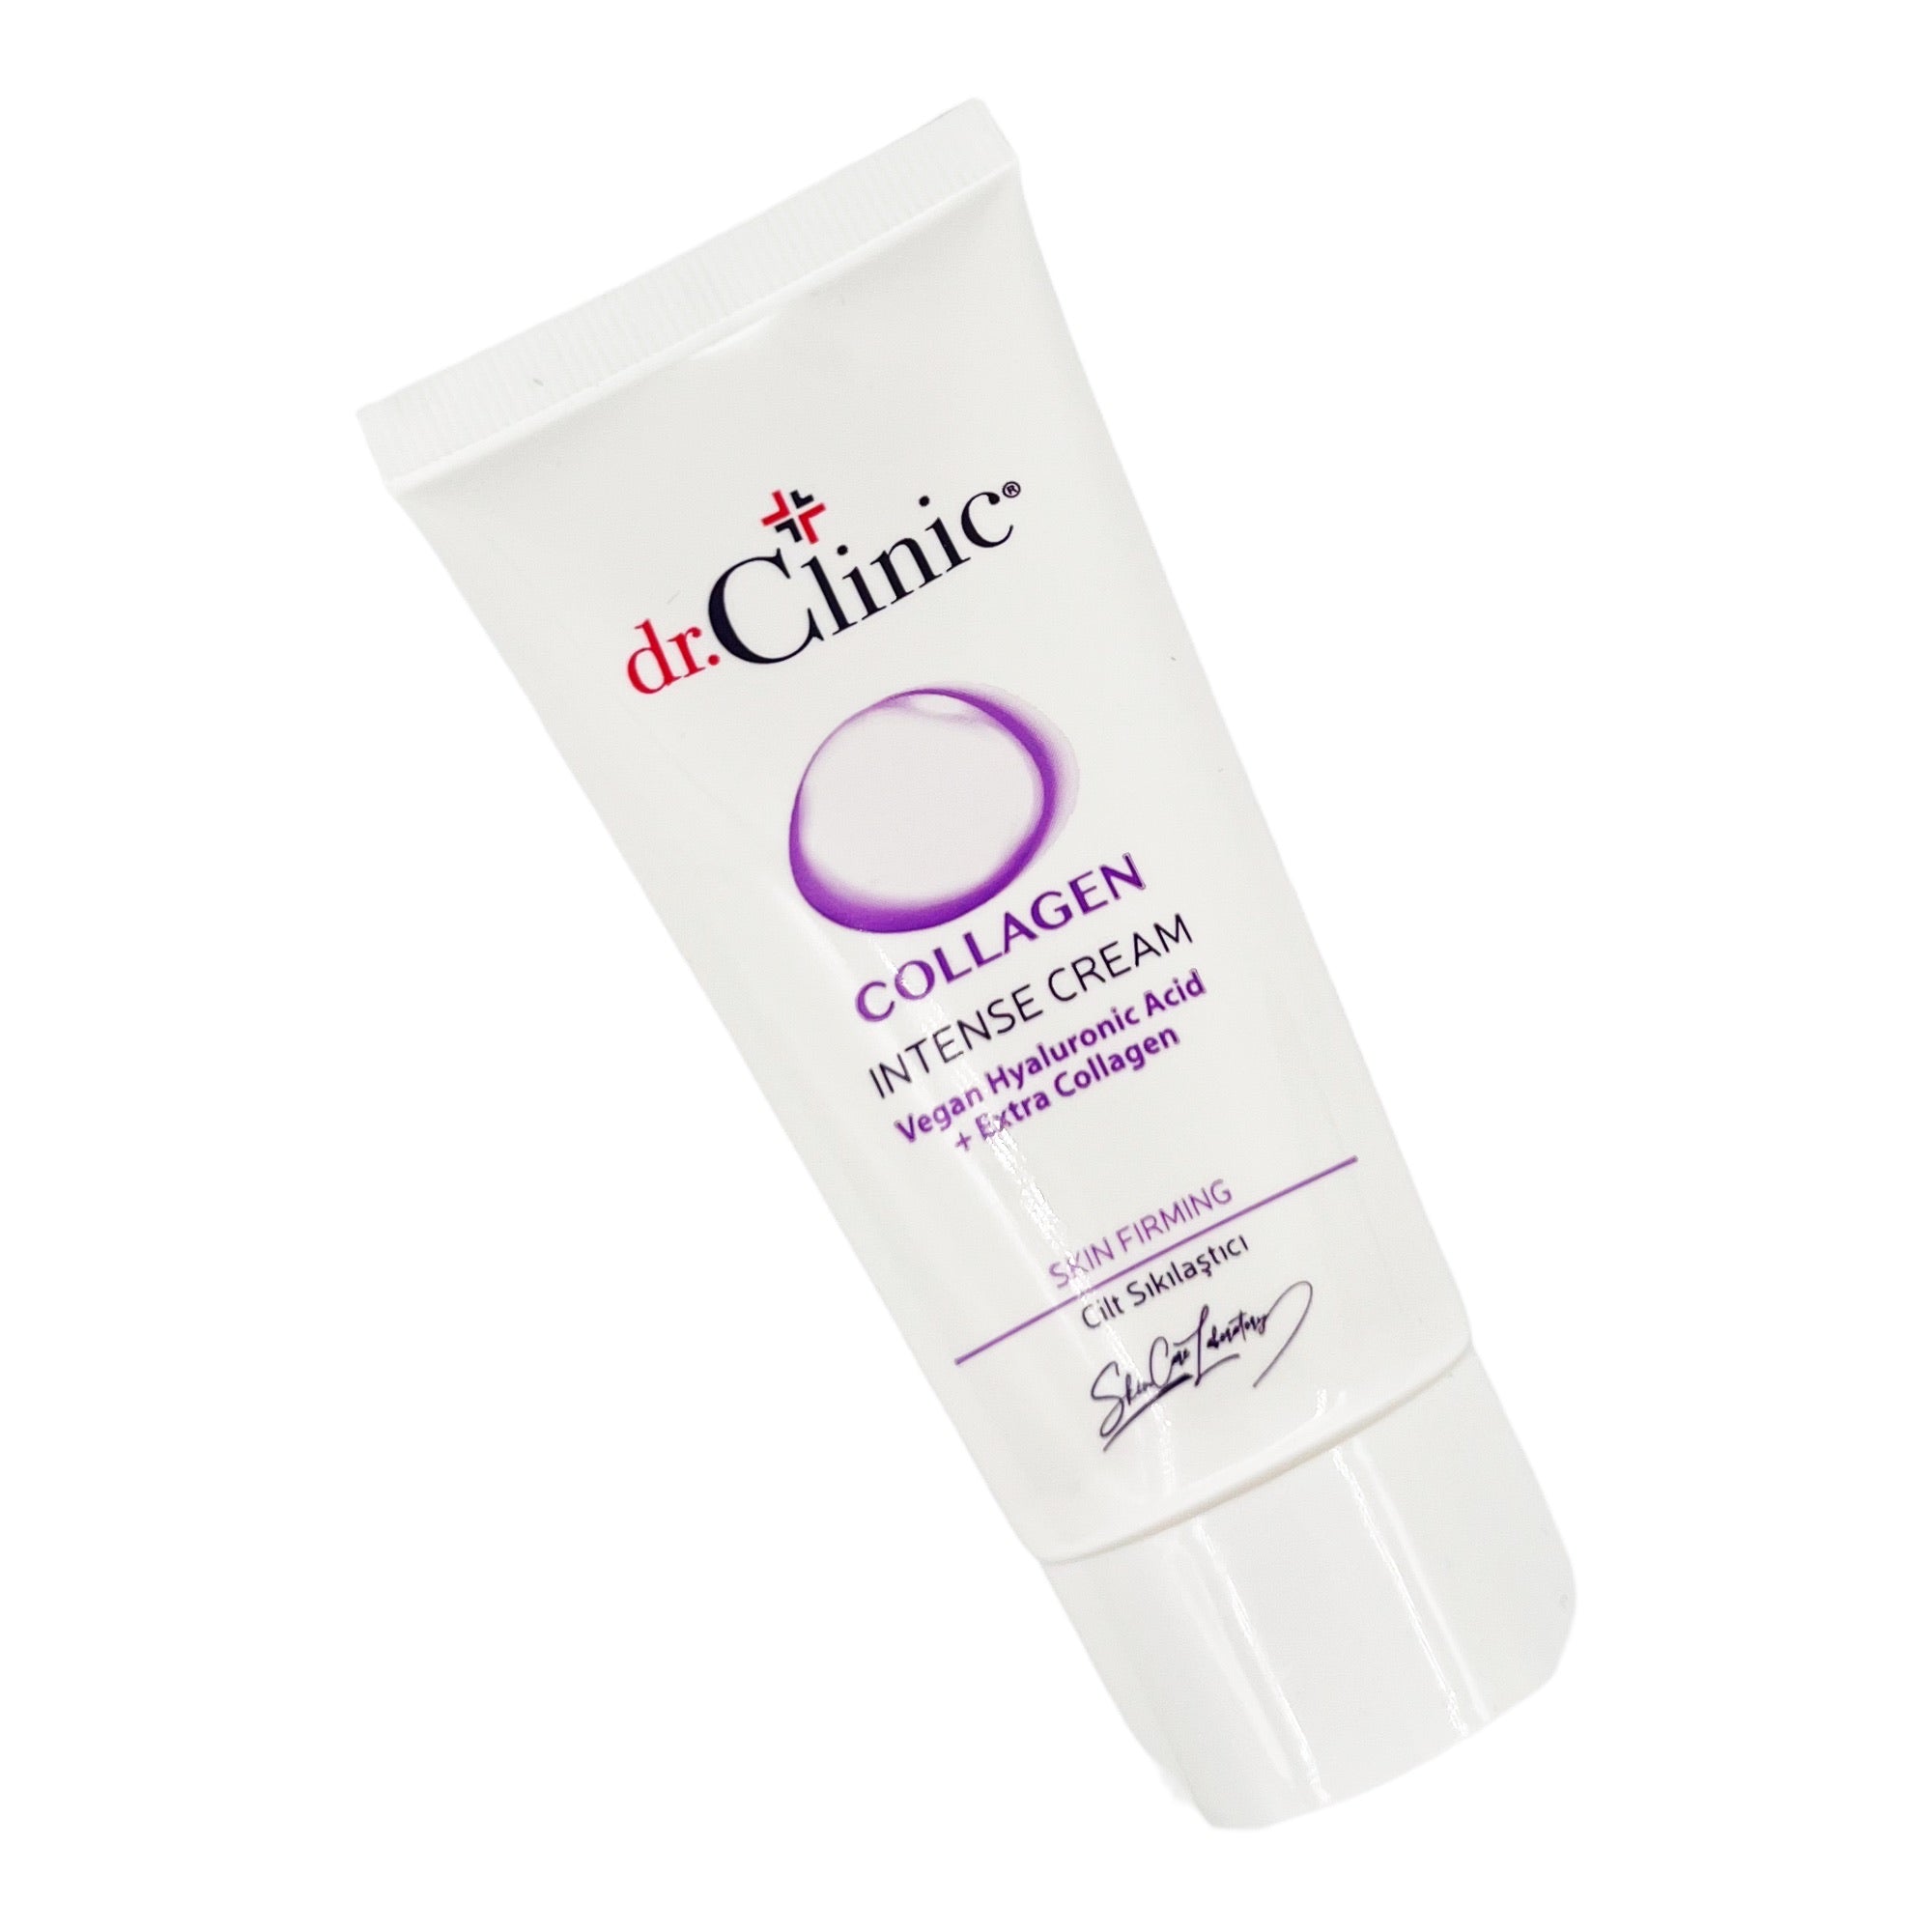 Dr.Clinic - Collagen Intense Cream 50ml